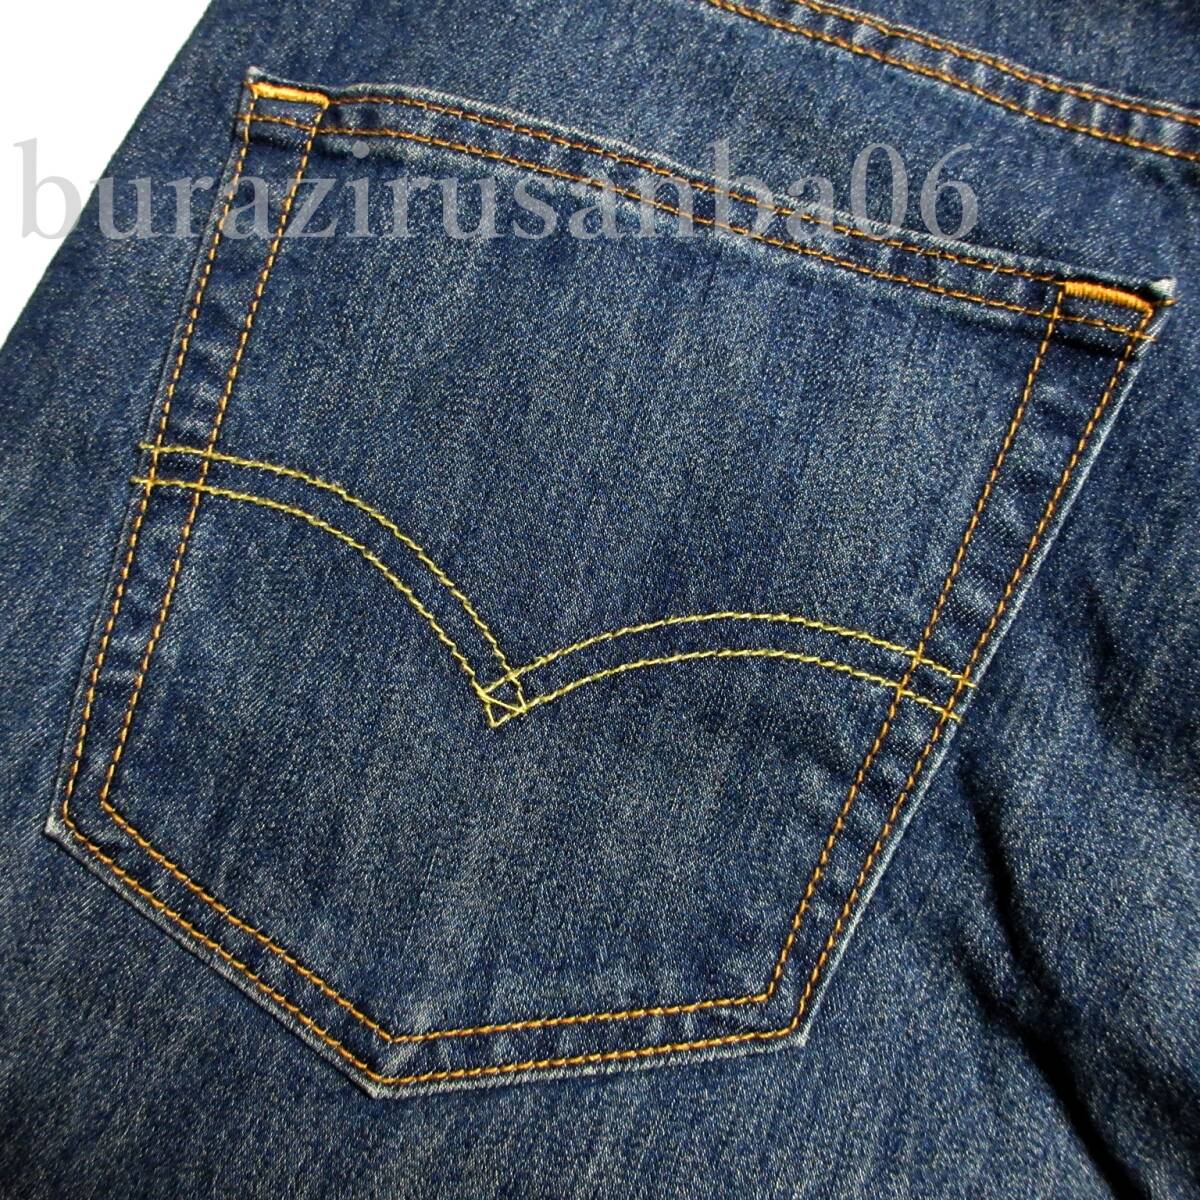 W36* unused regular price 10,450 jpy Levi\'s Levi's 505 COOL Denim pants jeans strut stretch spring summer speed .... Denim 00505-2624